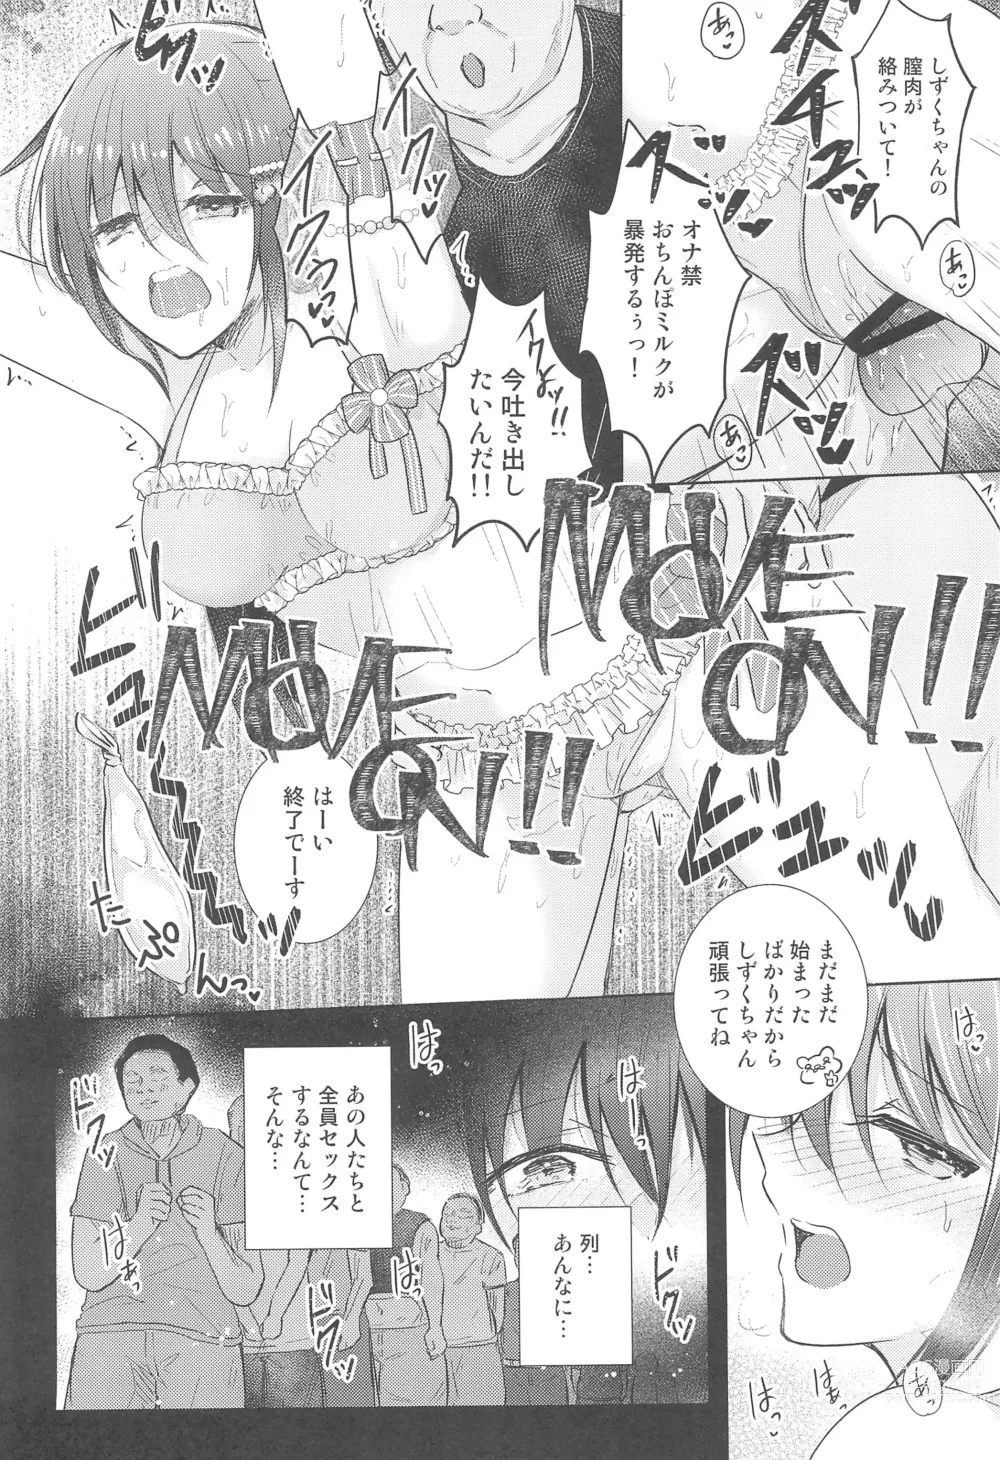 Page 12 of doujinshi Shizuku Fun meets